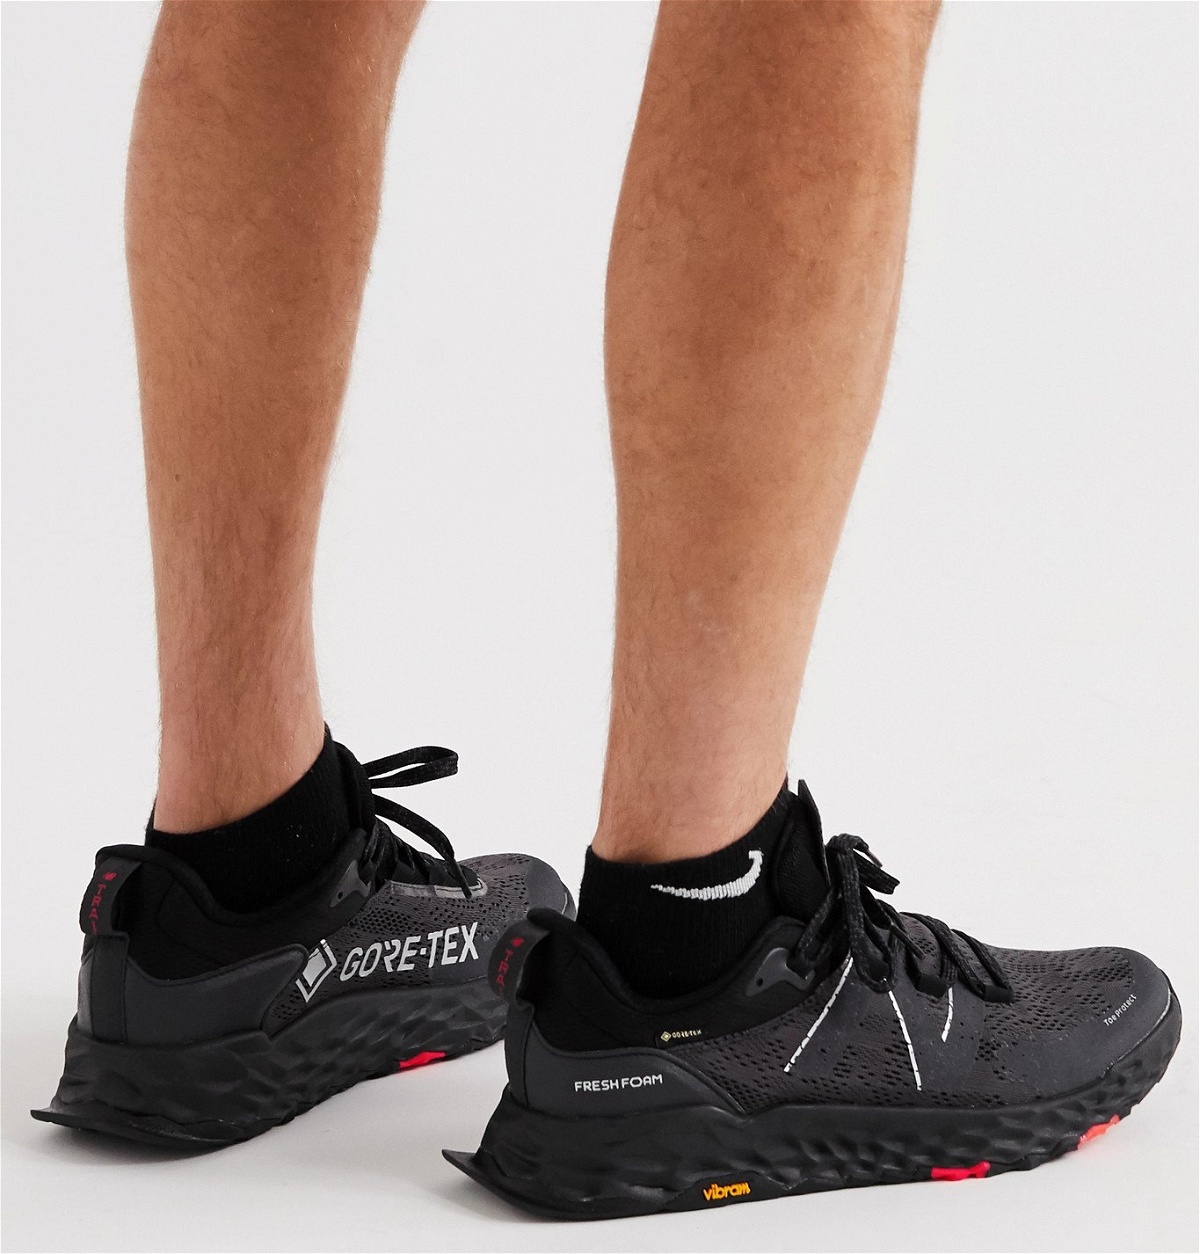 New - Hierro GORE-TEX Trail Running Sneakers - Black New Balance